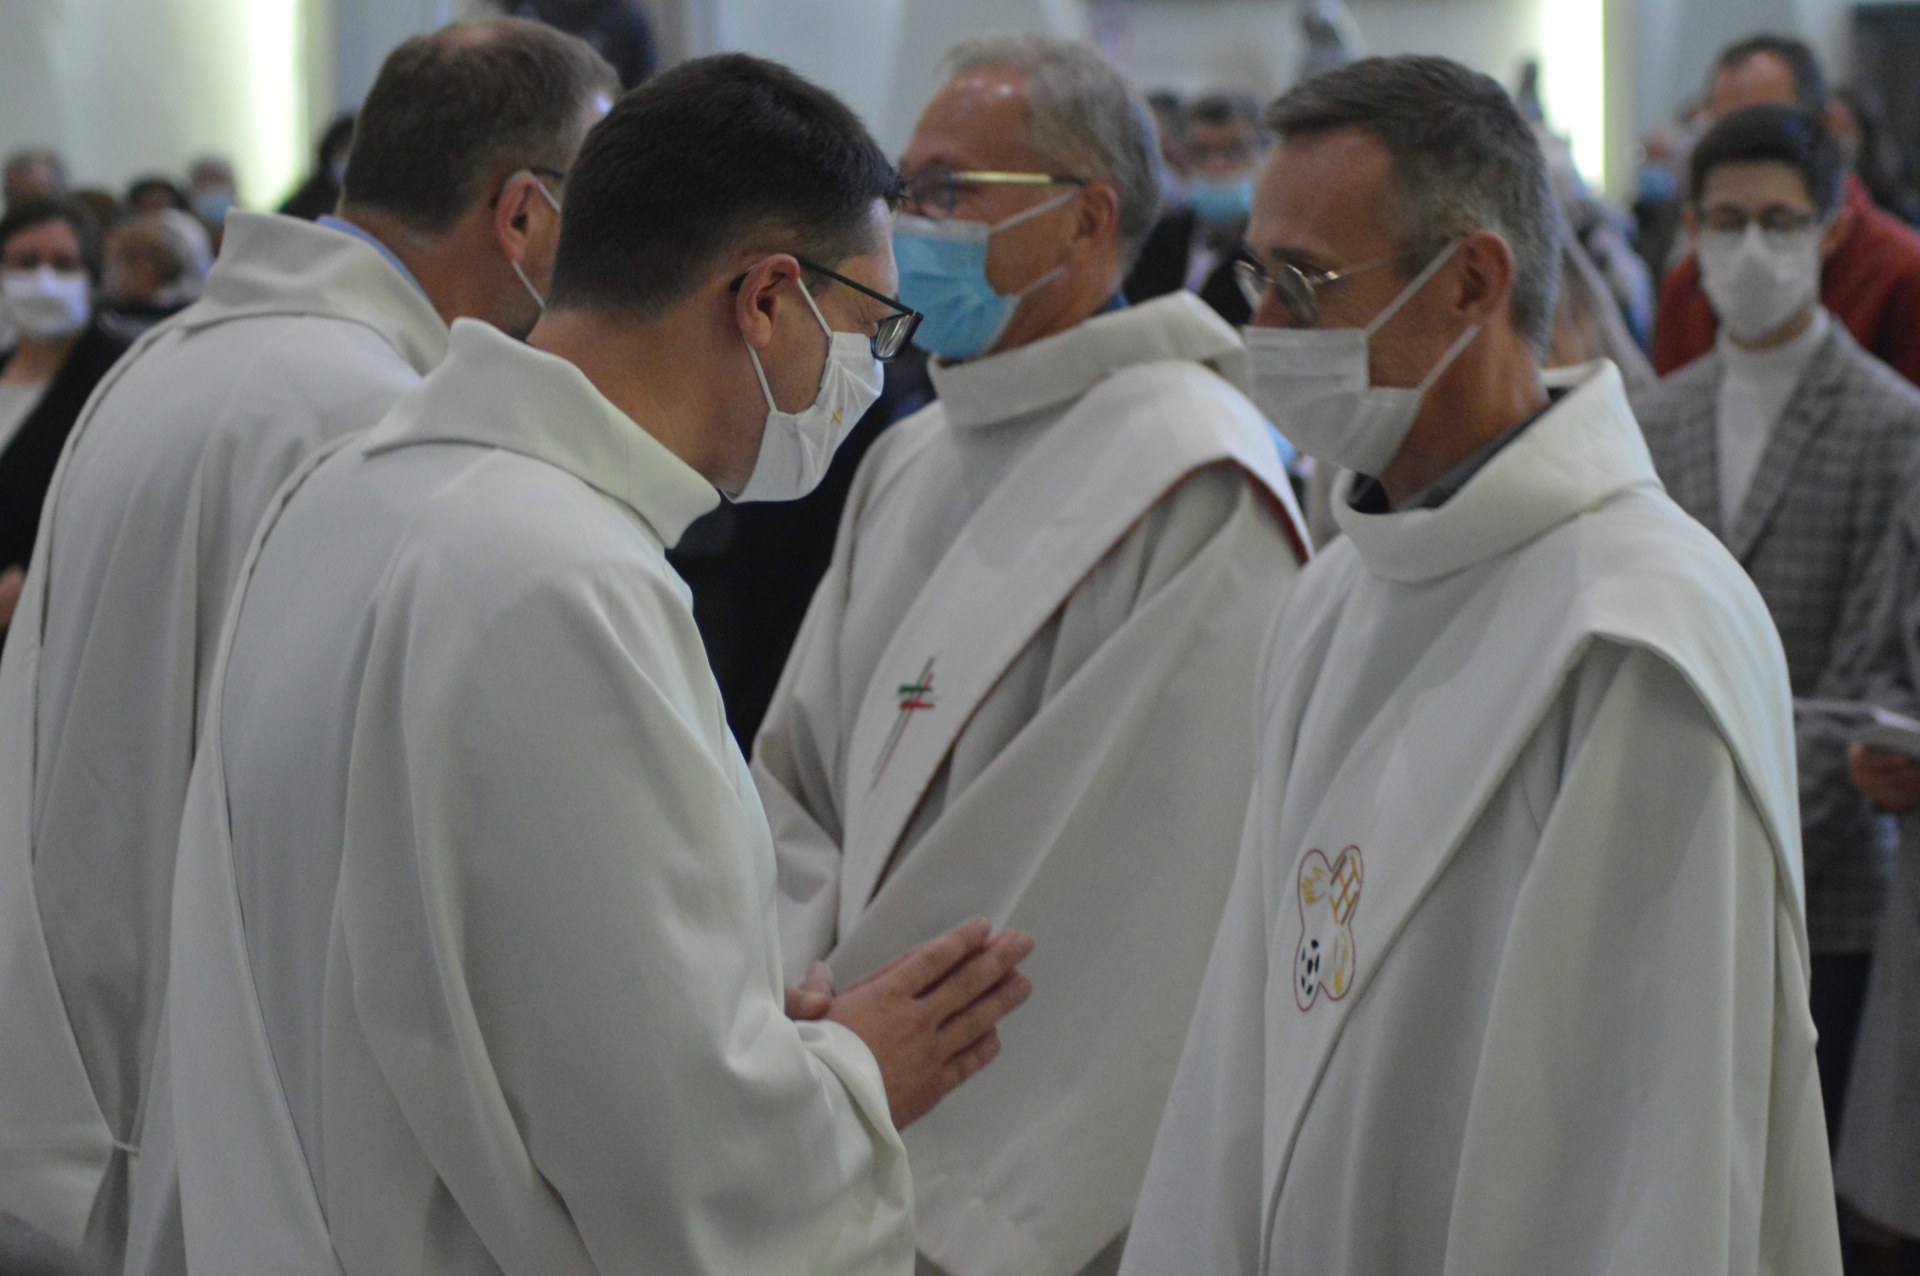 ordinations diaconales Maubeuge 2021 20